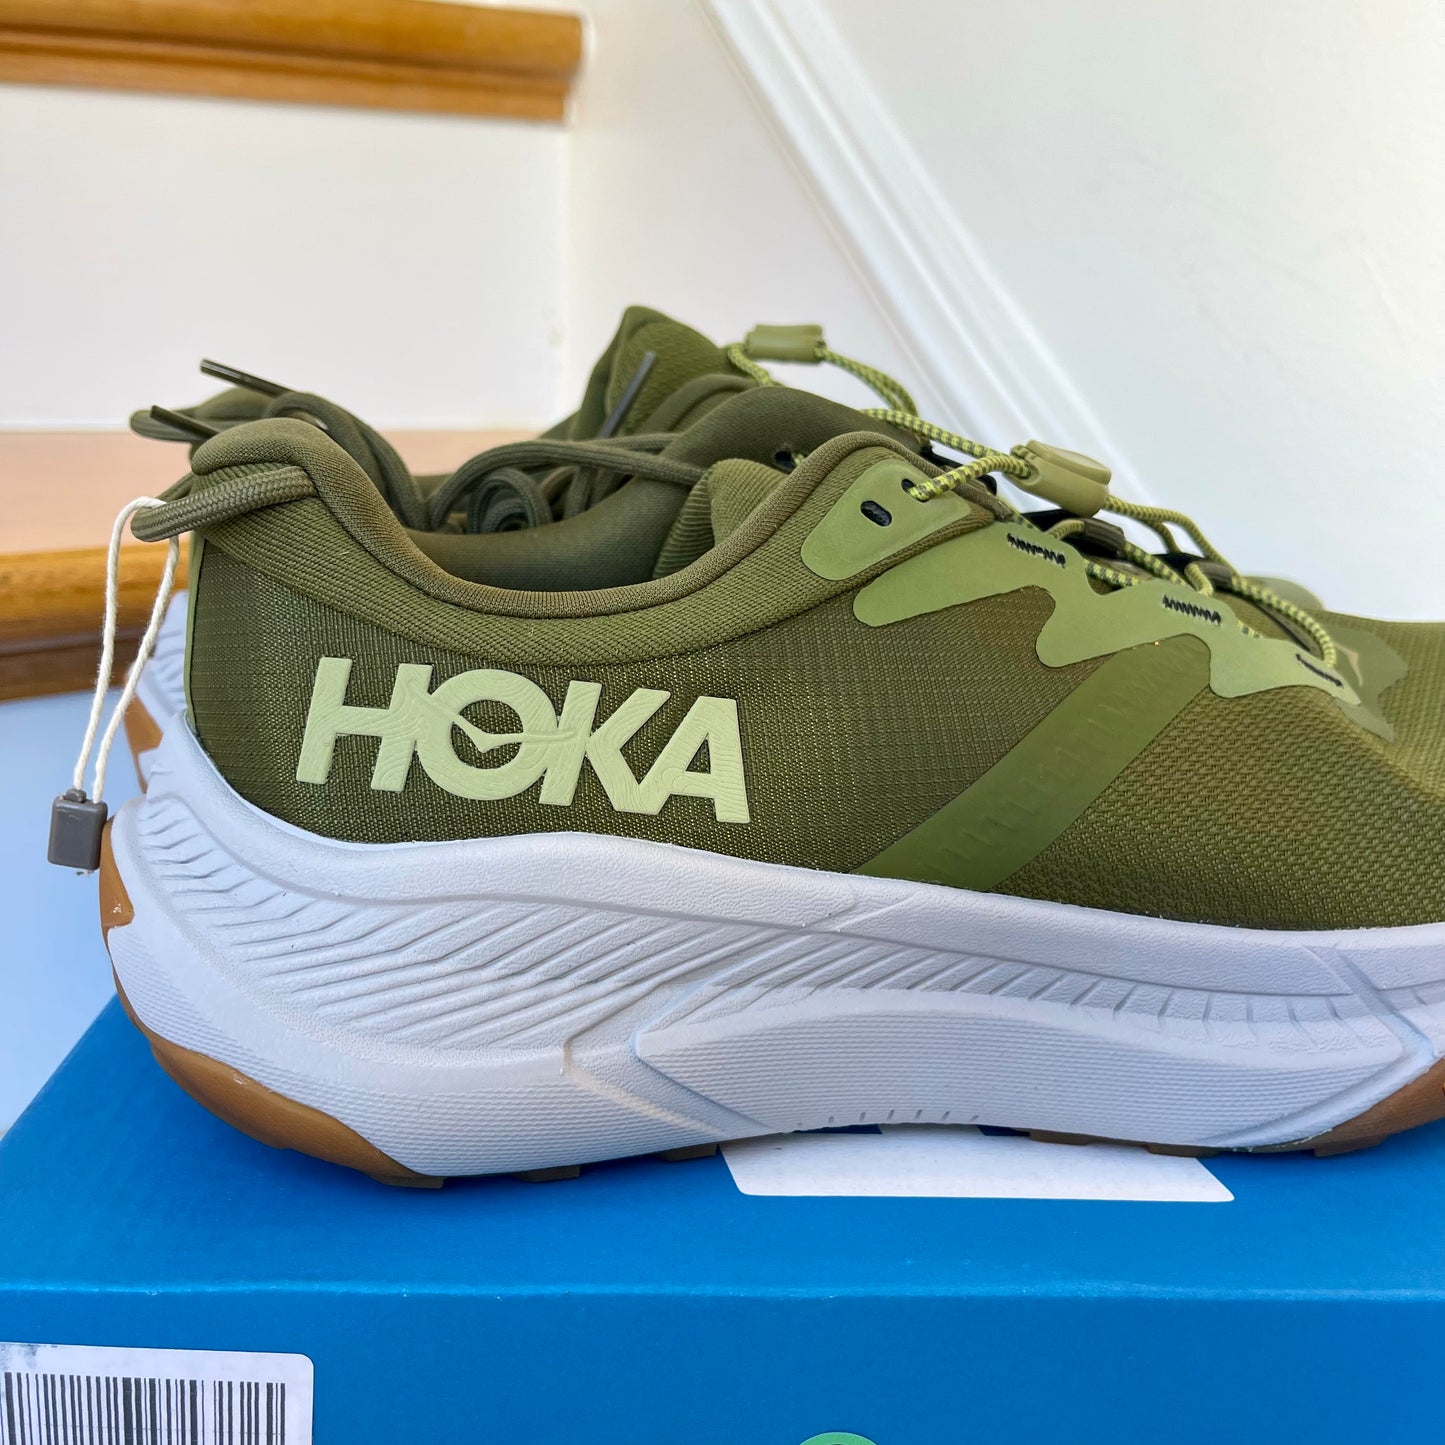 Hoka Transport in Avocado / Harbor Mist Green / Grey Athletic Hiking Shoes